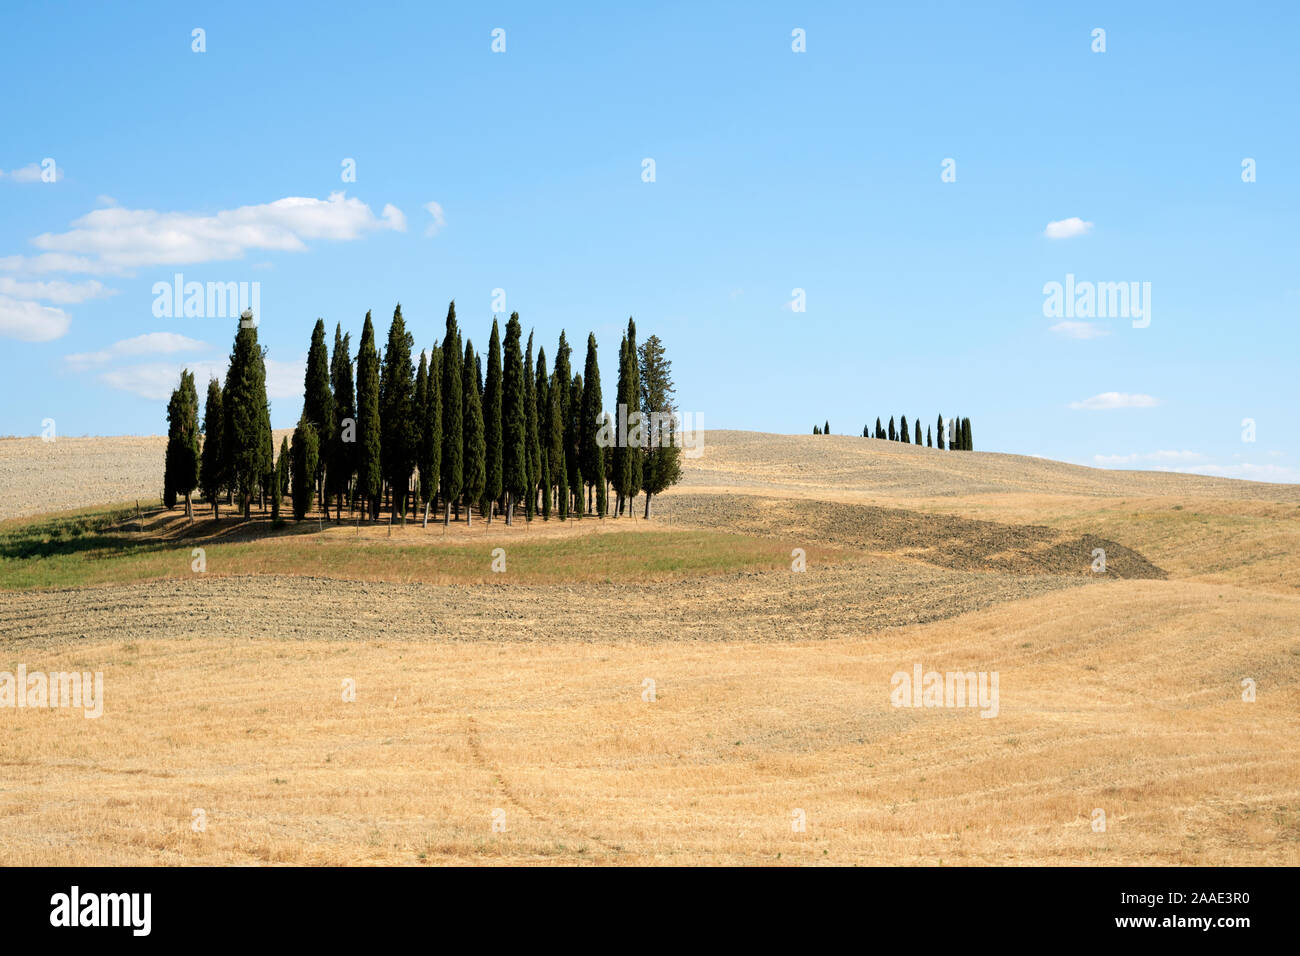 Cipressi di San Quirico d'Orcia / Les Cyprès de San Quirico d'Orcia - été paysage agricole toscane italie - campagne Toscane Banque D'Images